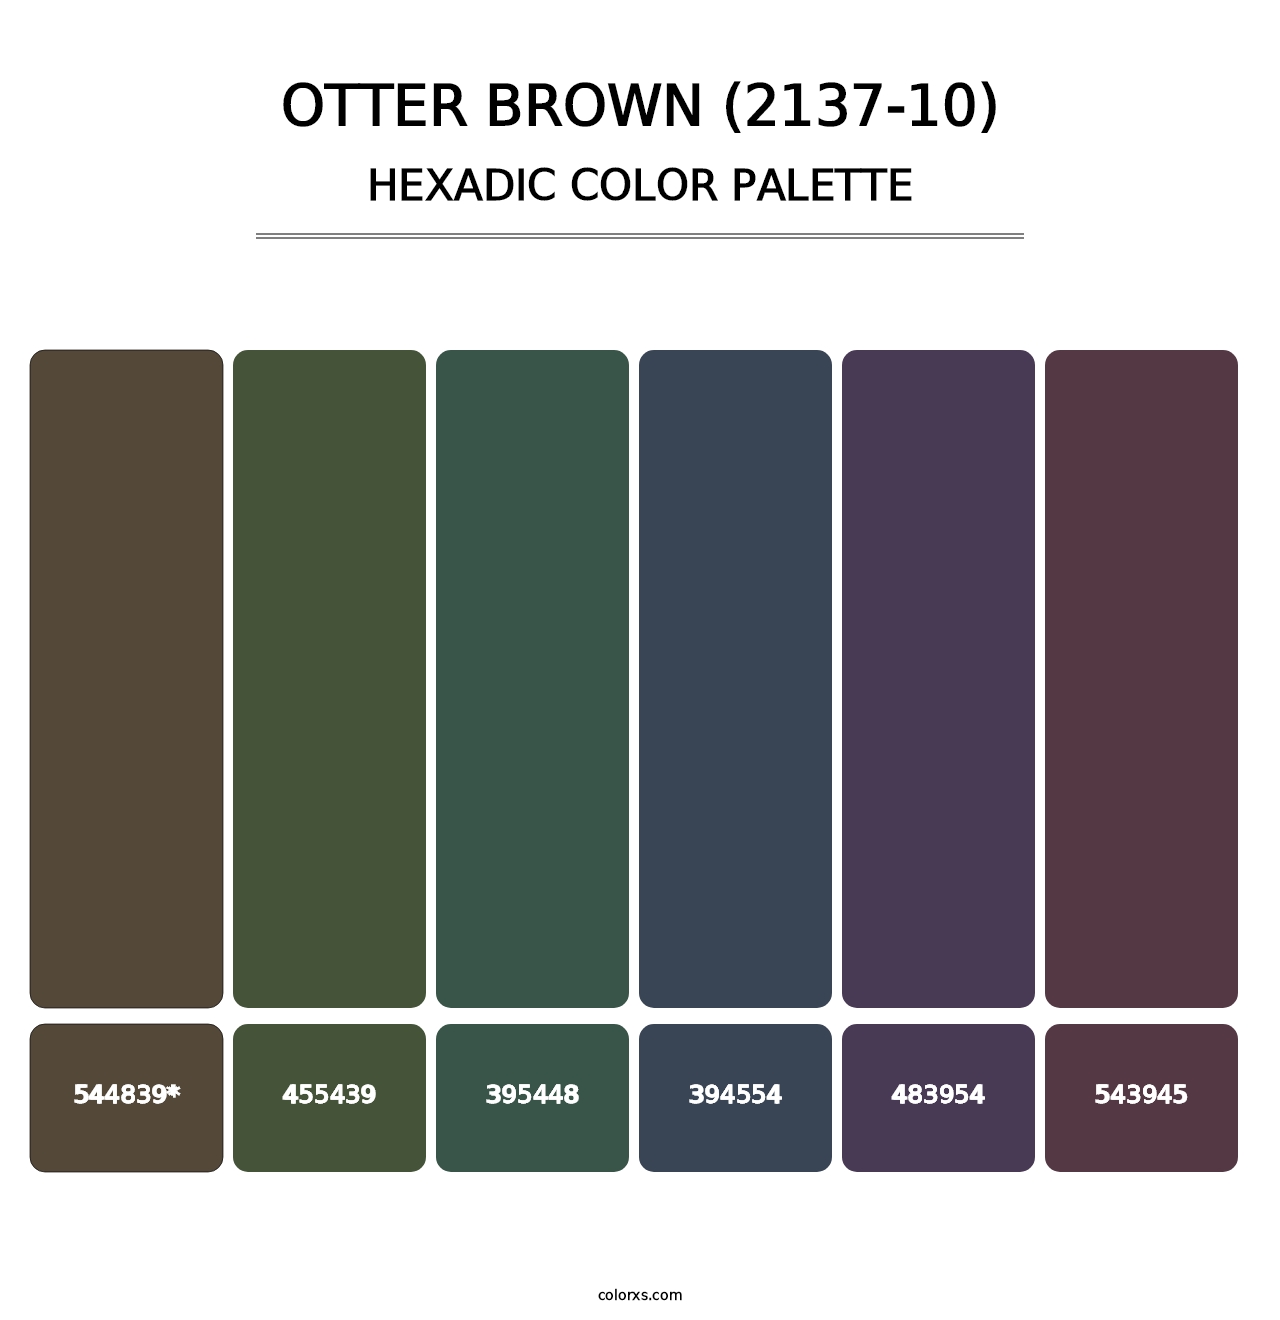 Otter Brown (2137-10) - Hexadic Color Palette